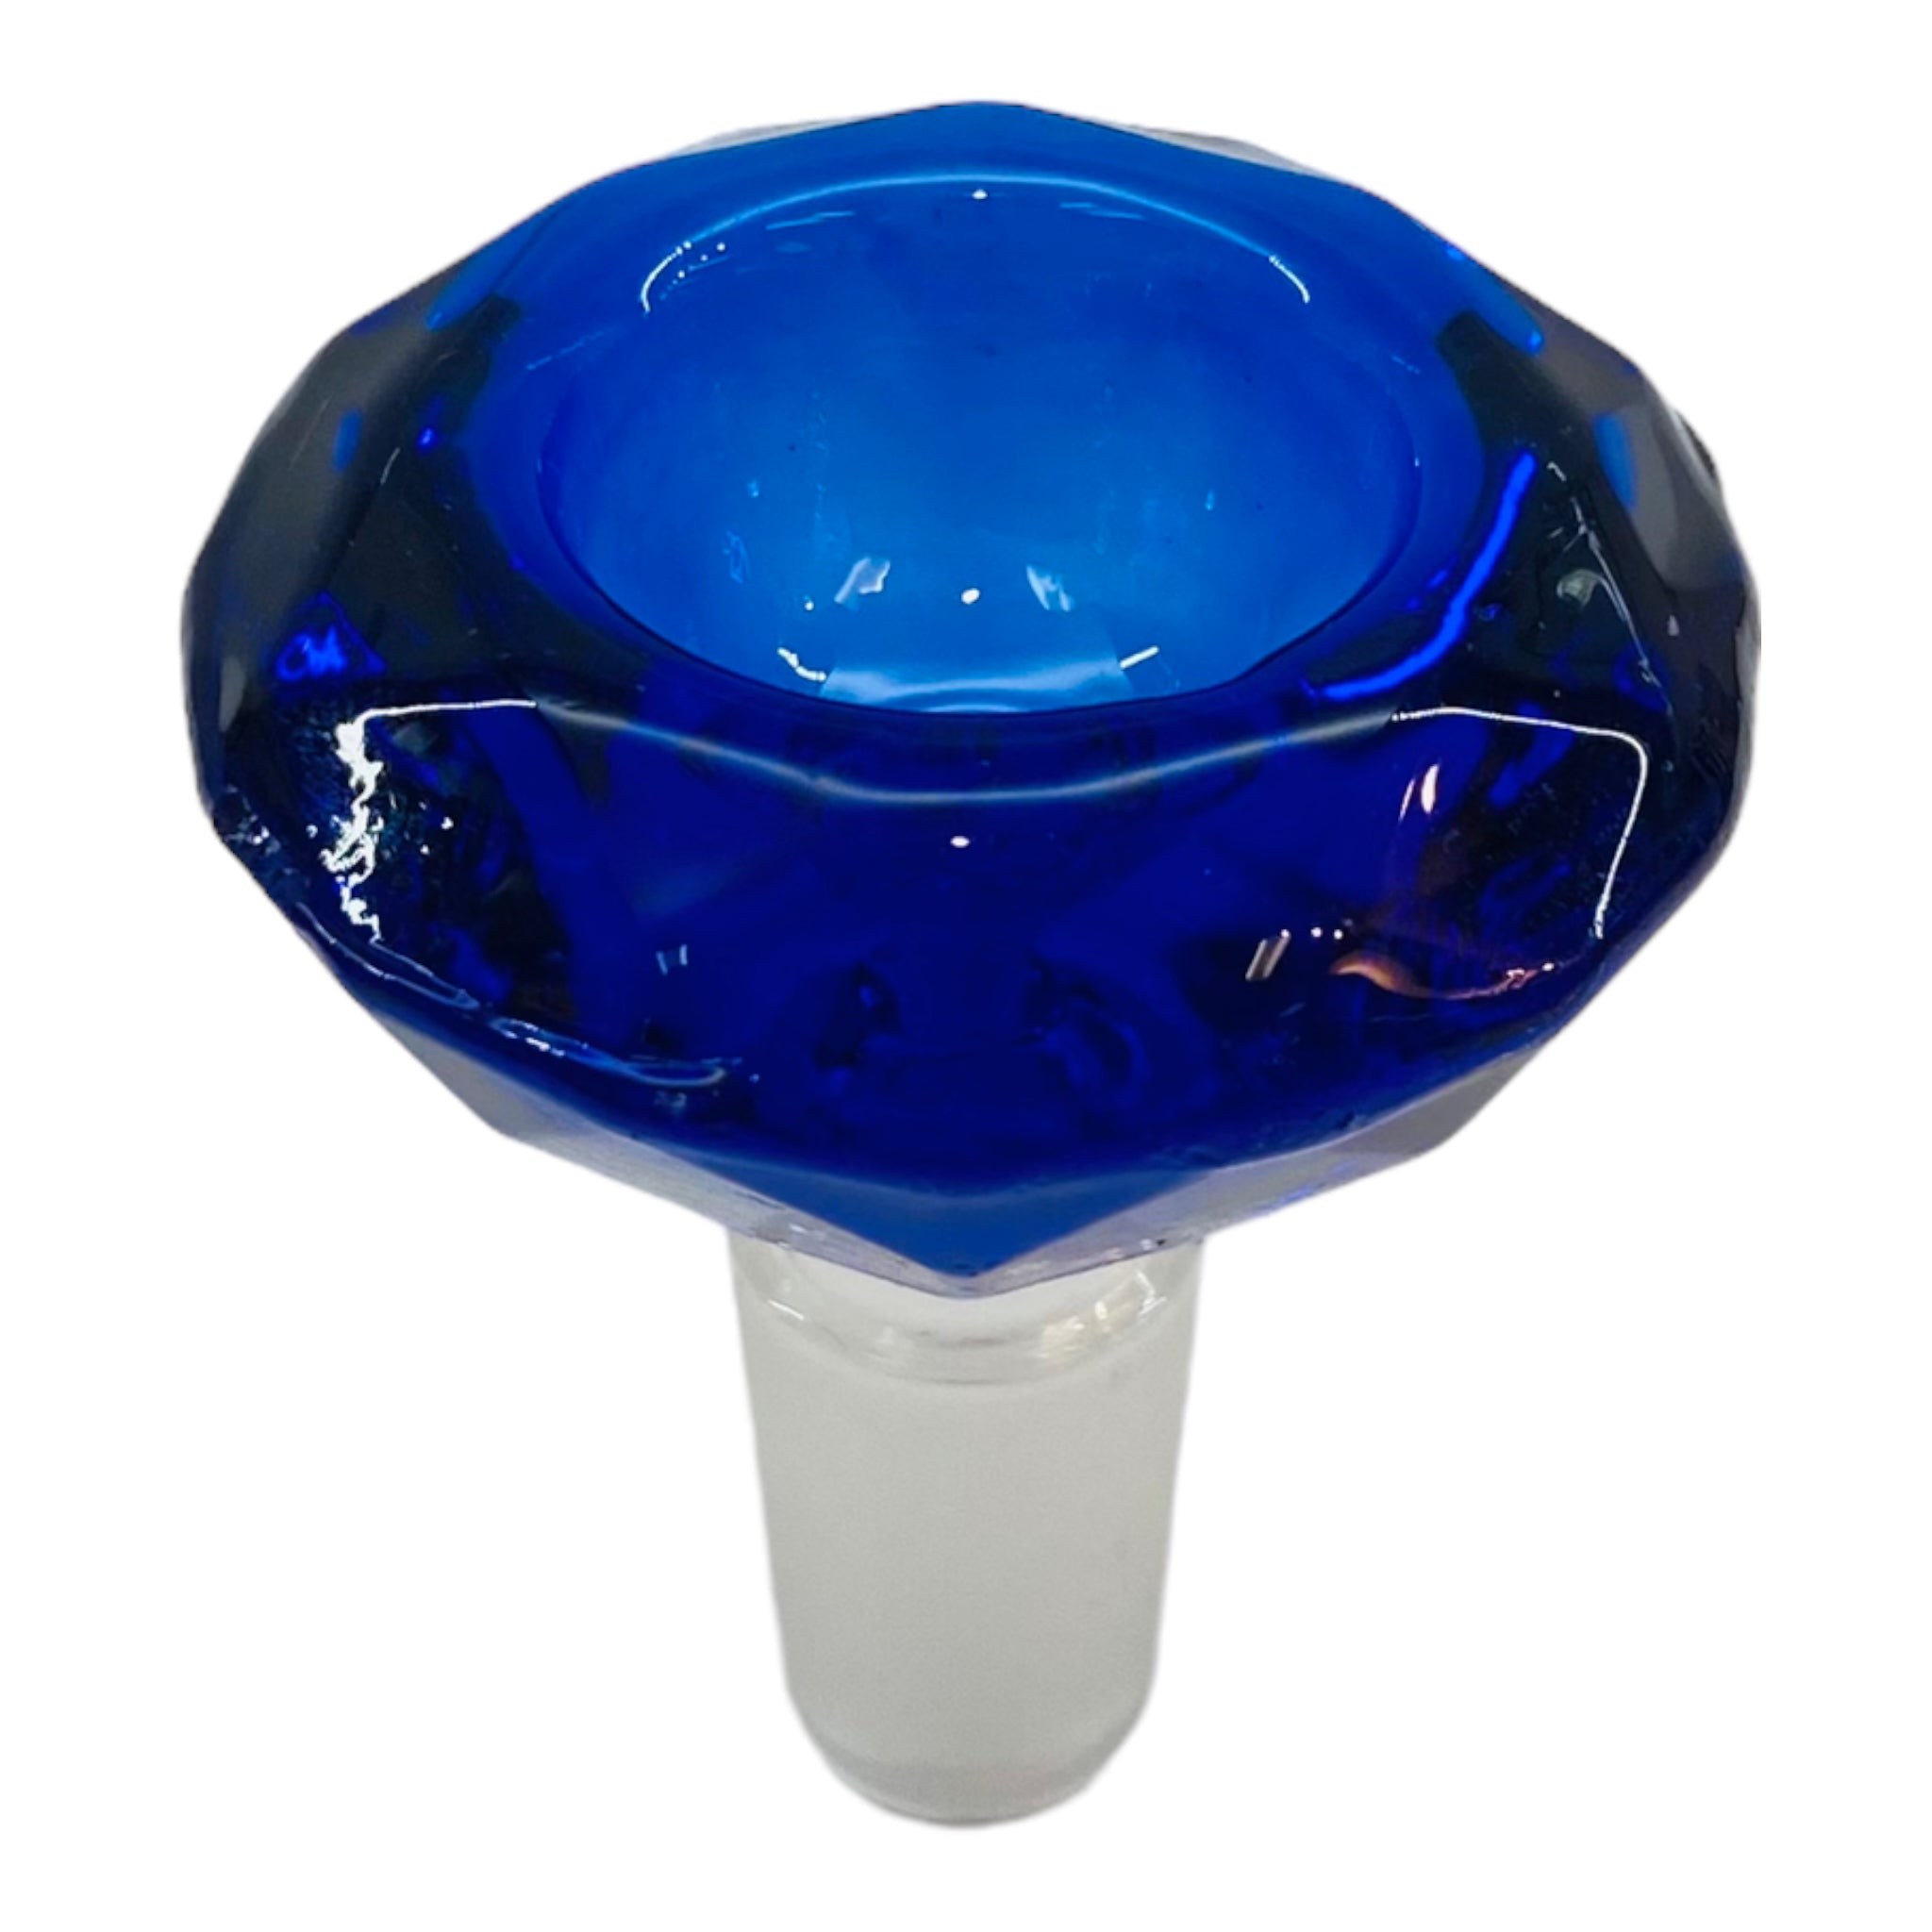 14mm Flower Bowl - Faceted Diamond Glass Bong Bowl Piece - Blue